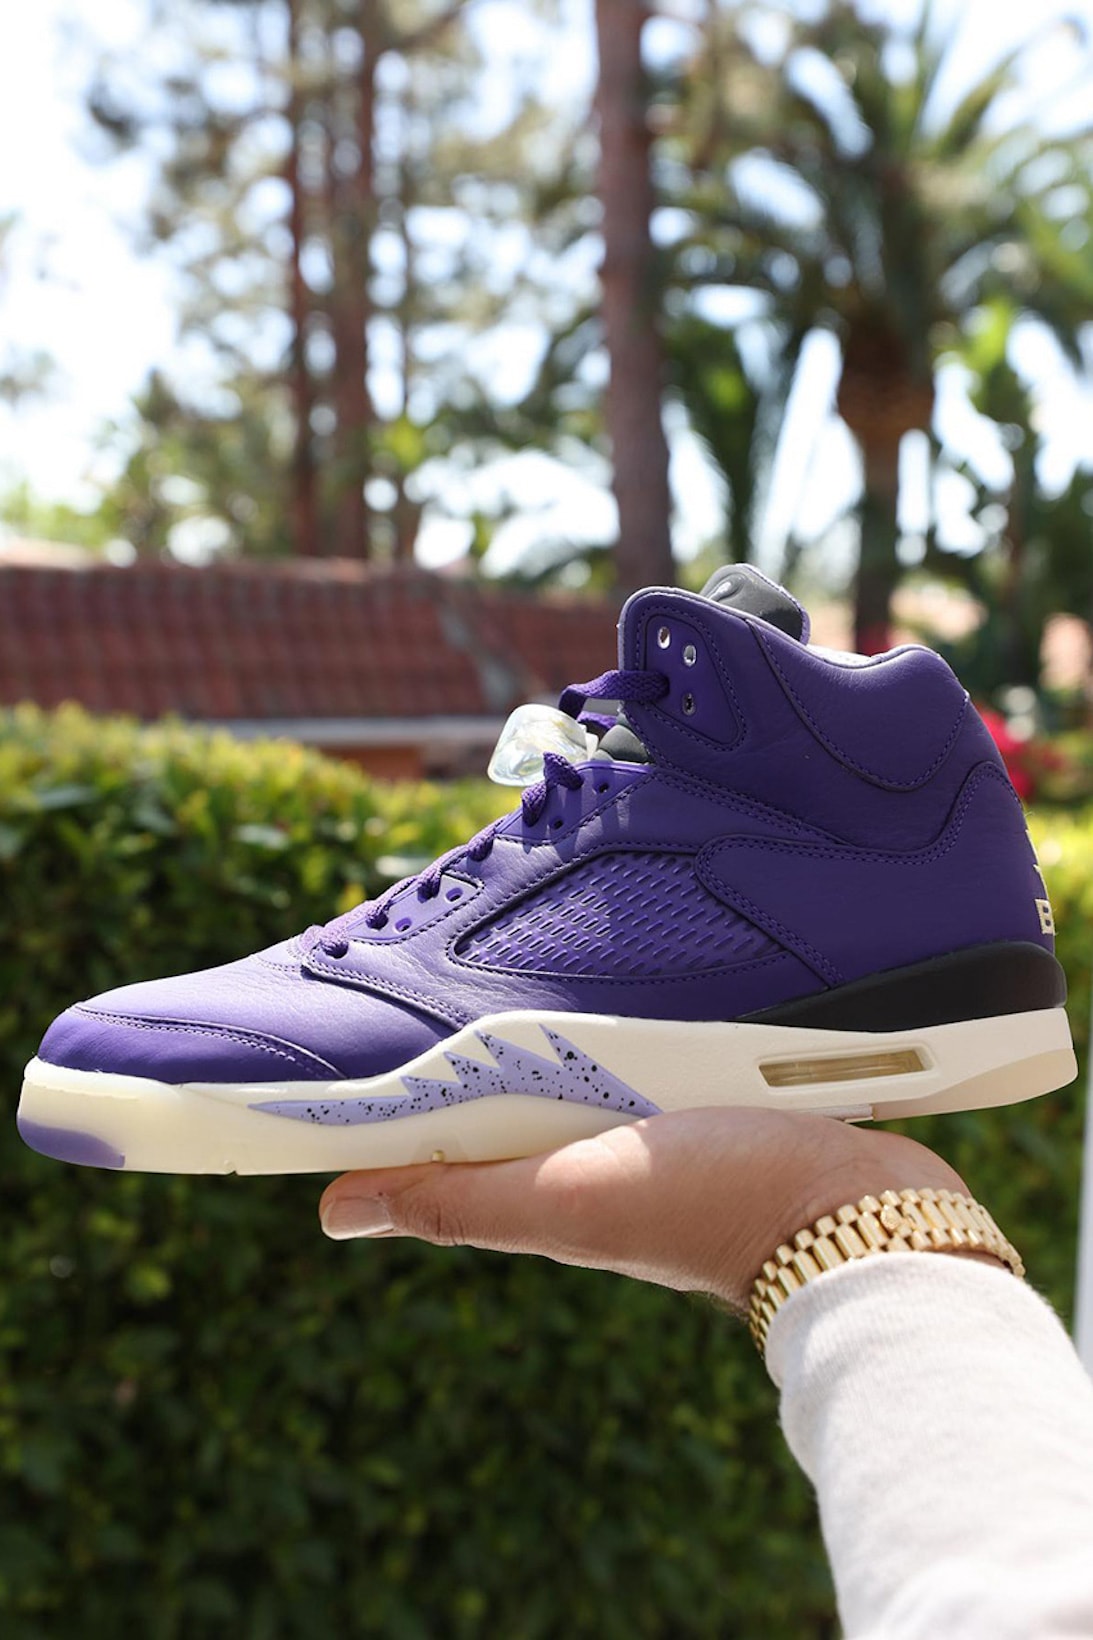 DJ Khaled Nike Air Jordan 5 We The Best Collection Collaboration Sneakers Pastel Blue Purple White Cream Orange Coral